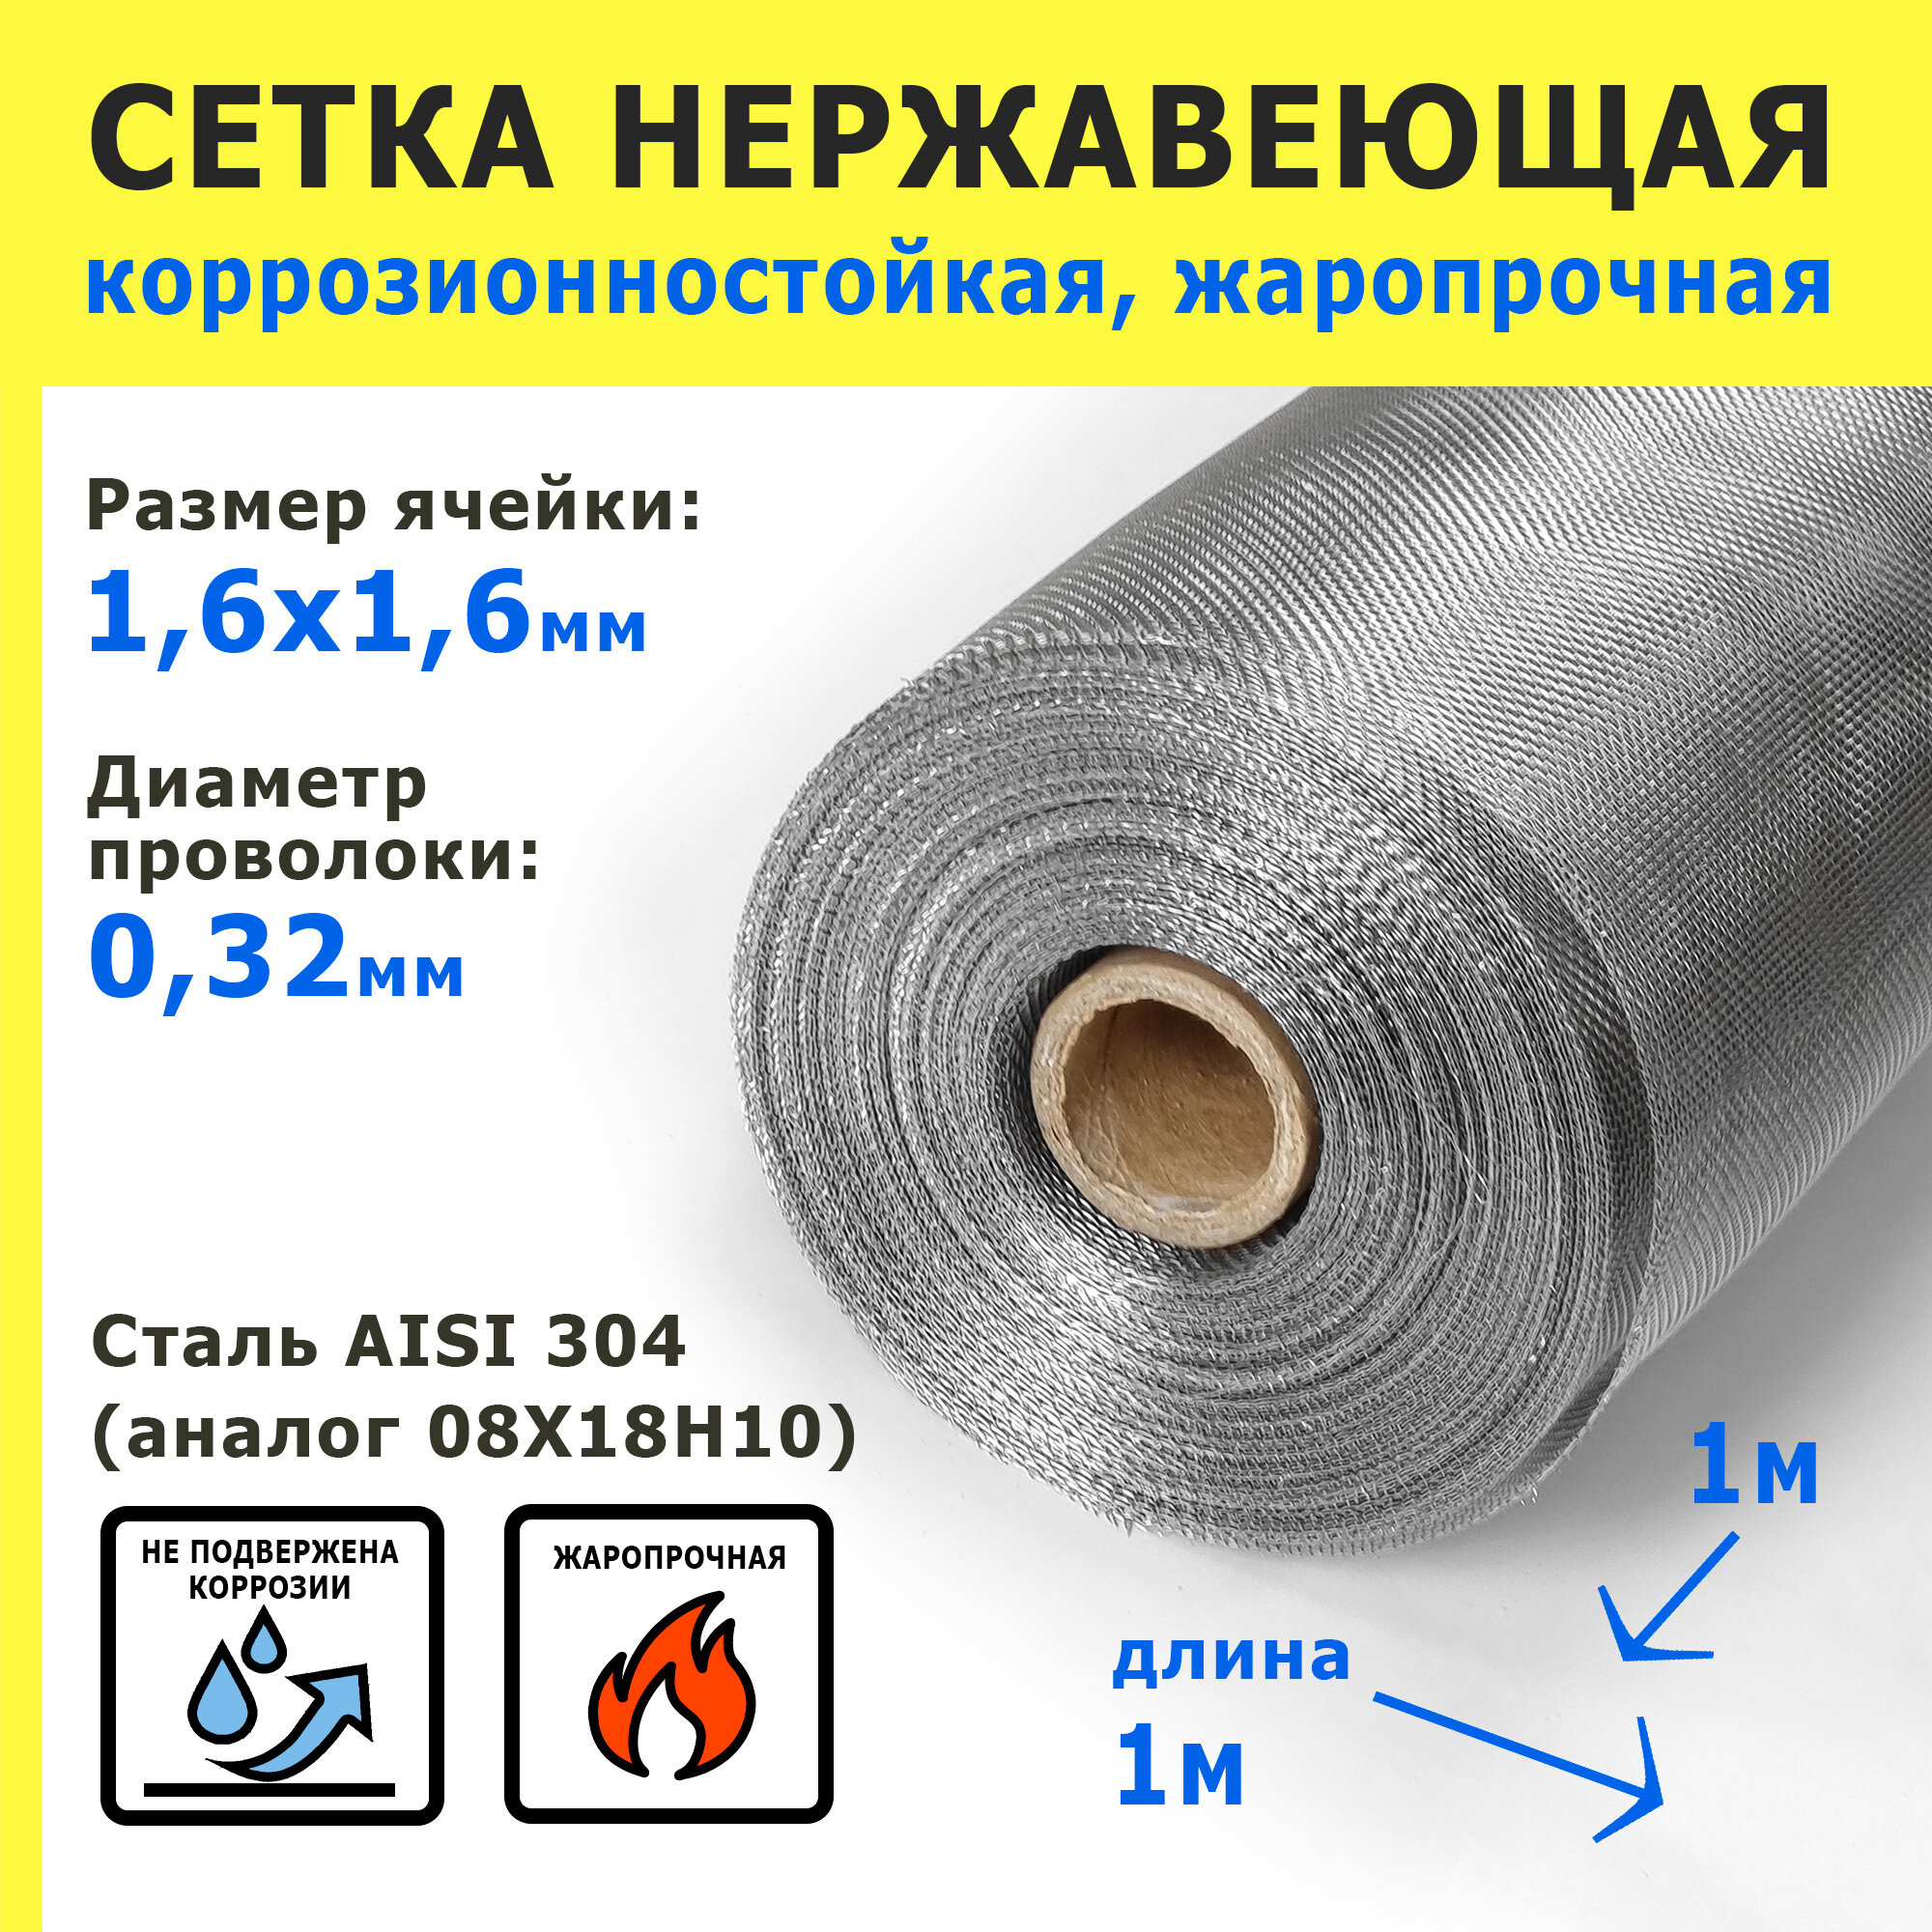 Сетка нержавеющая 1,6х1,6х0,32 мм для фильтрации, очистки, просеивания. Cталь AISI 304 (08Х18Н10). Размер 1х1 метр.